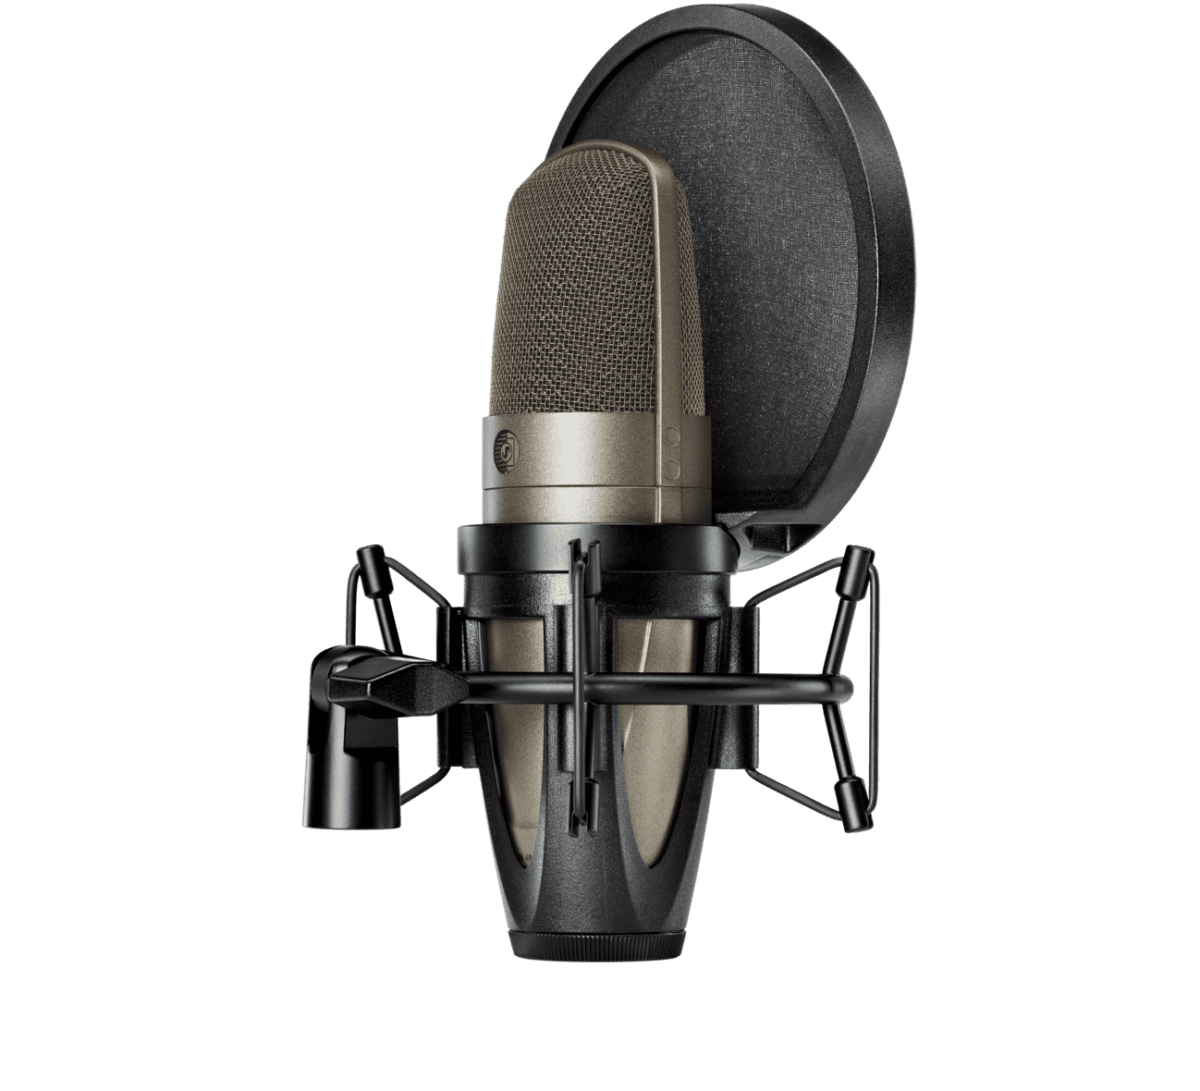 Shure KSM42/SG Large-diaphragm Condenser Microphone